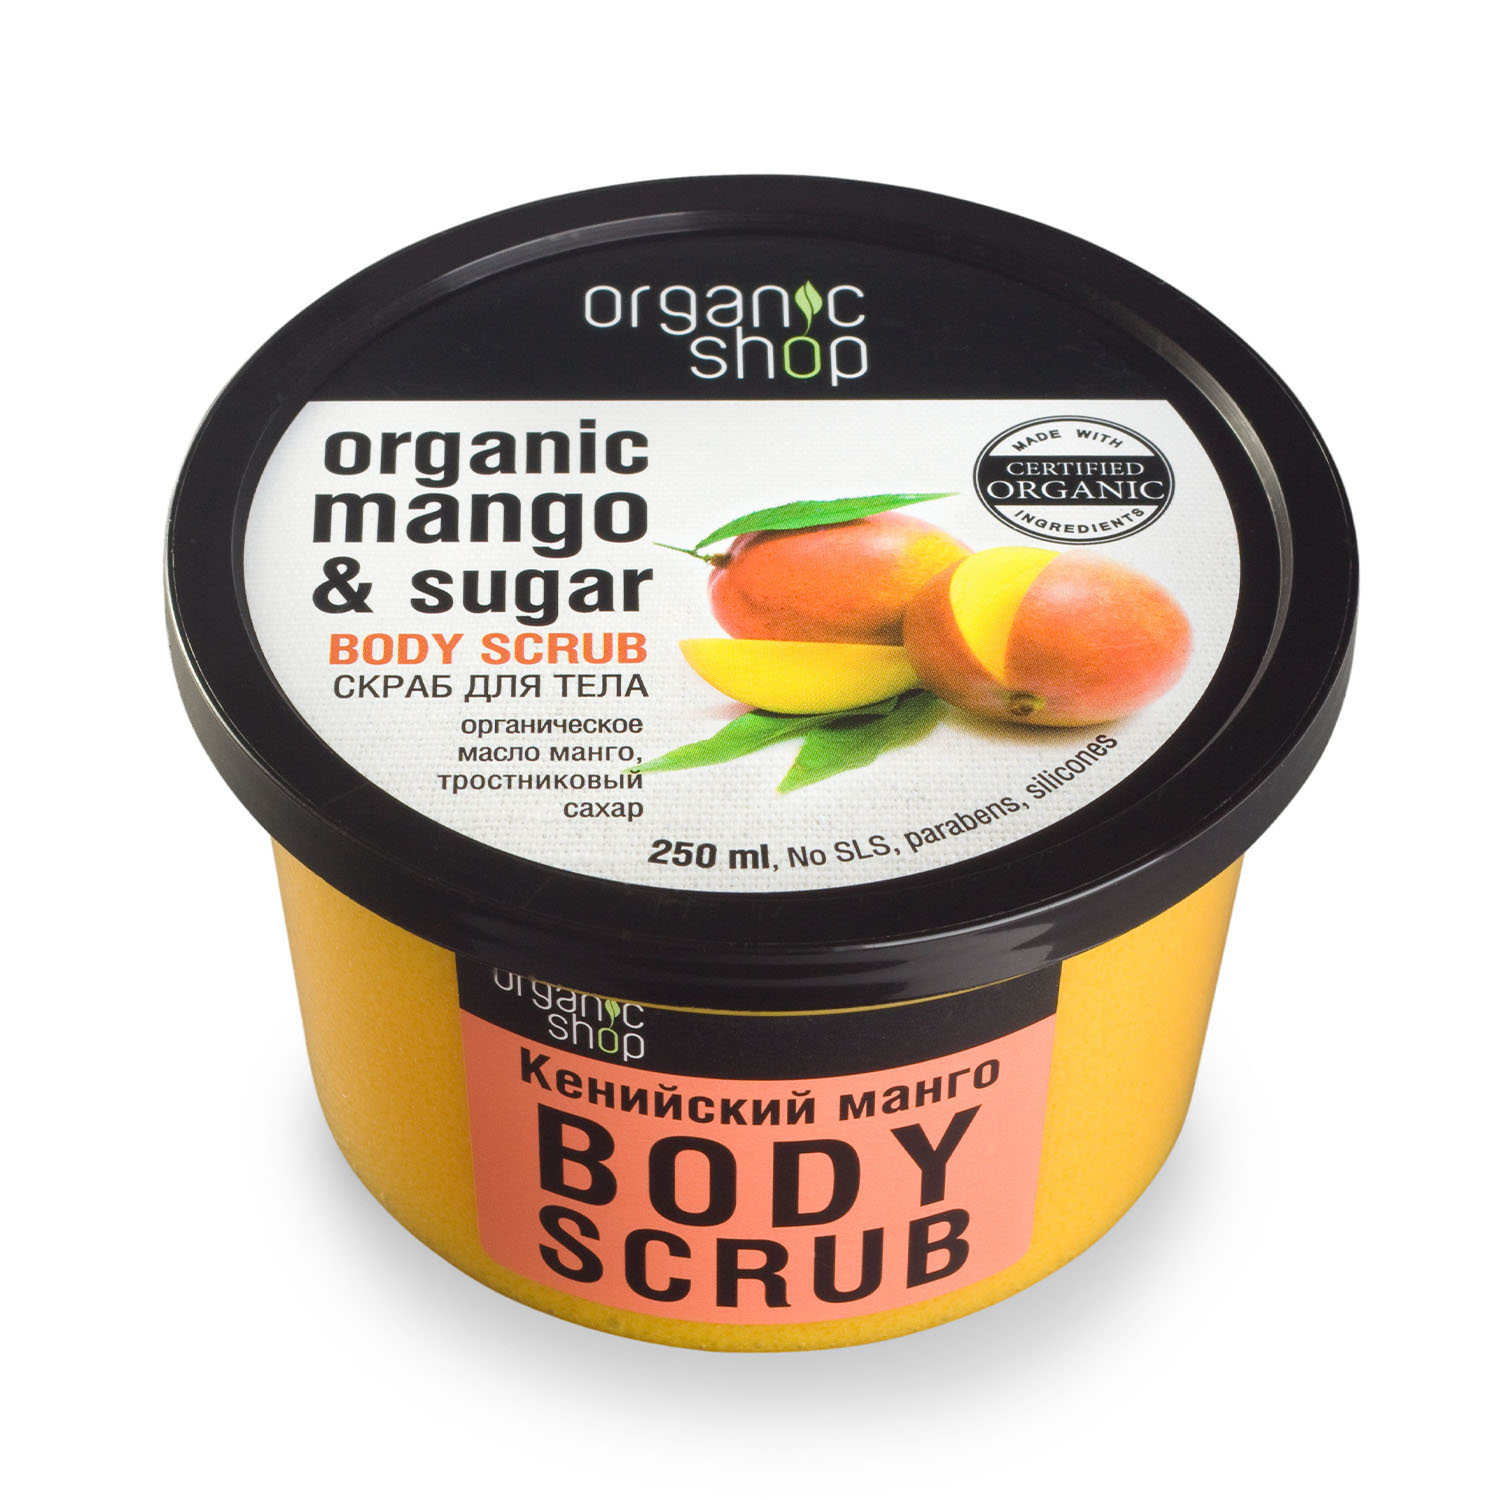 Organic Shop Скраб для тела Кенийский манго, 250 мл (Organic Shop, Классика) скраб для тела organic shop скраб для тела кенийский манго